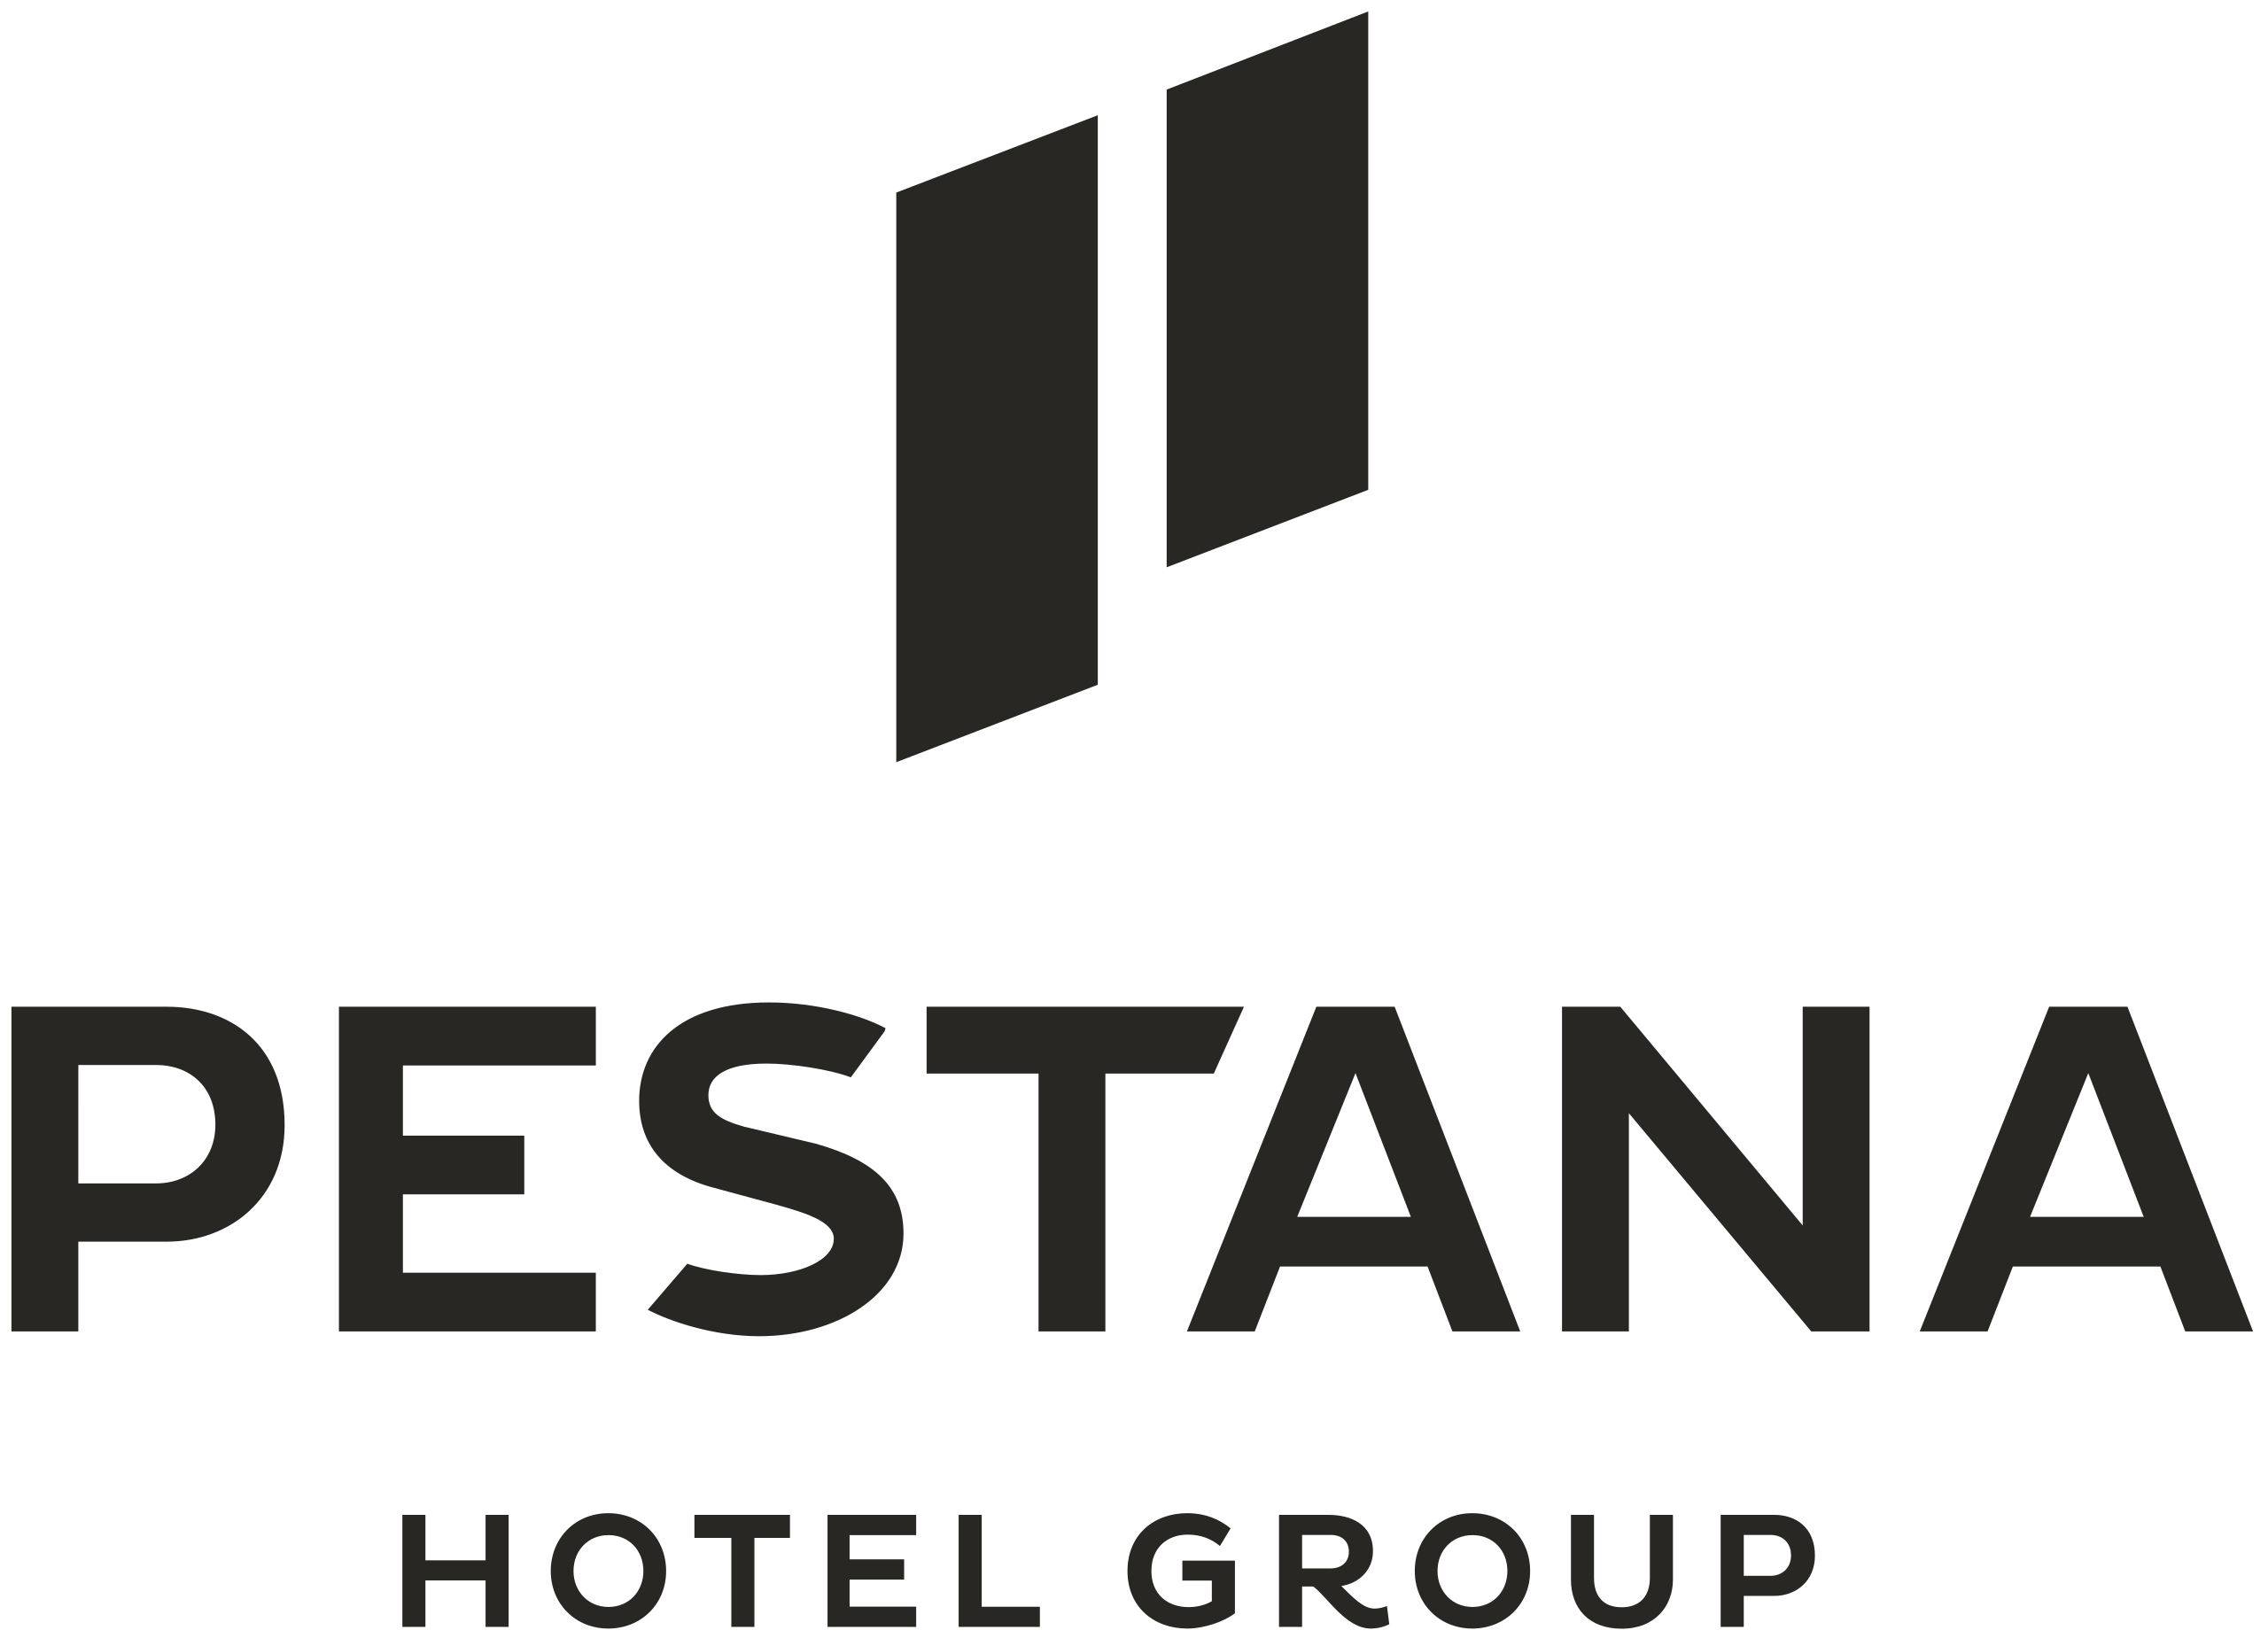 2560px-Pestana_Group_logo.svg